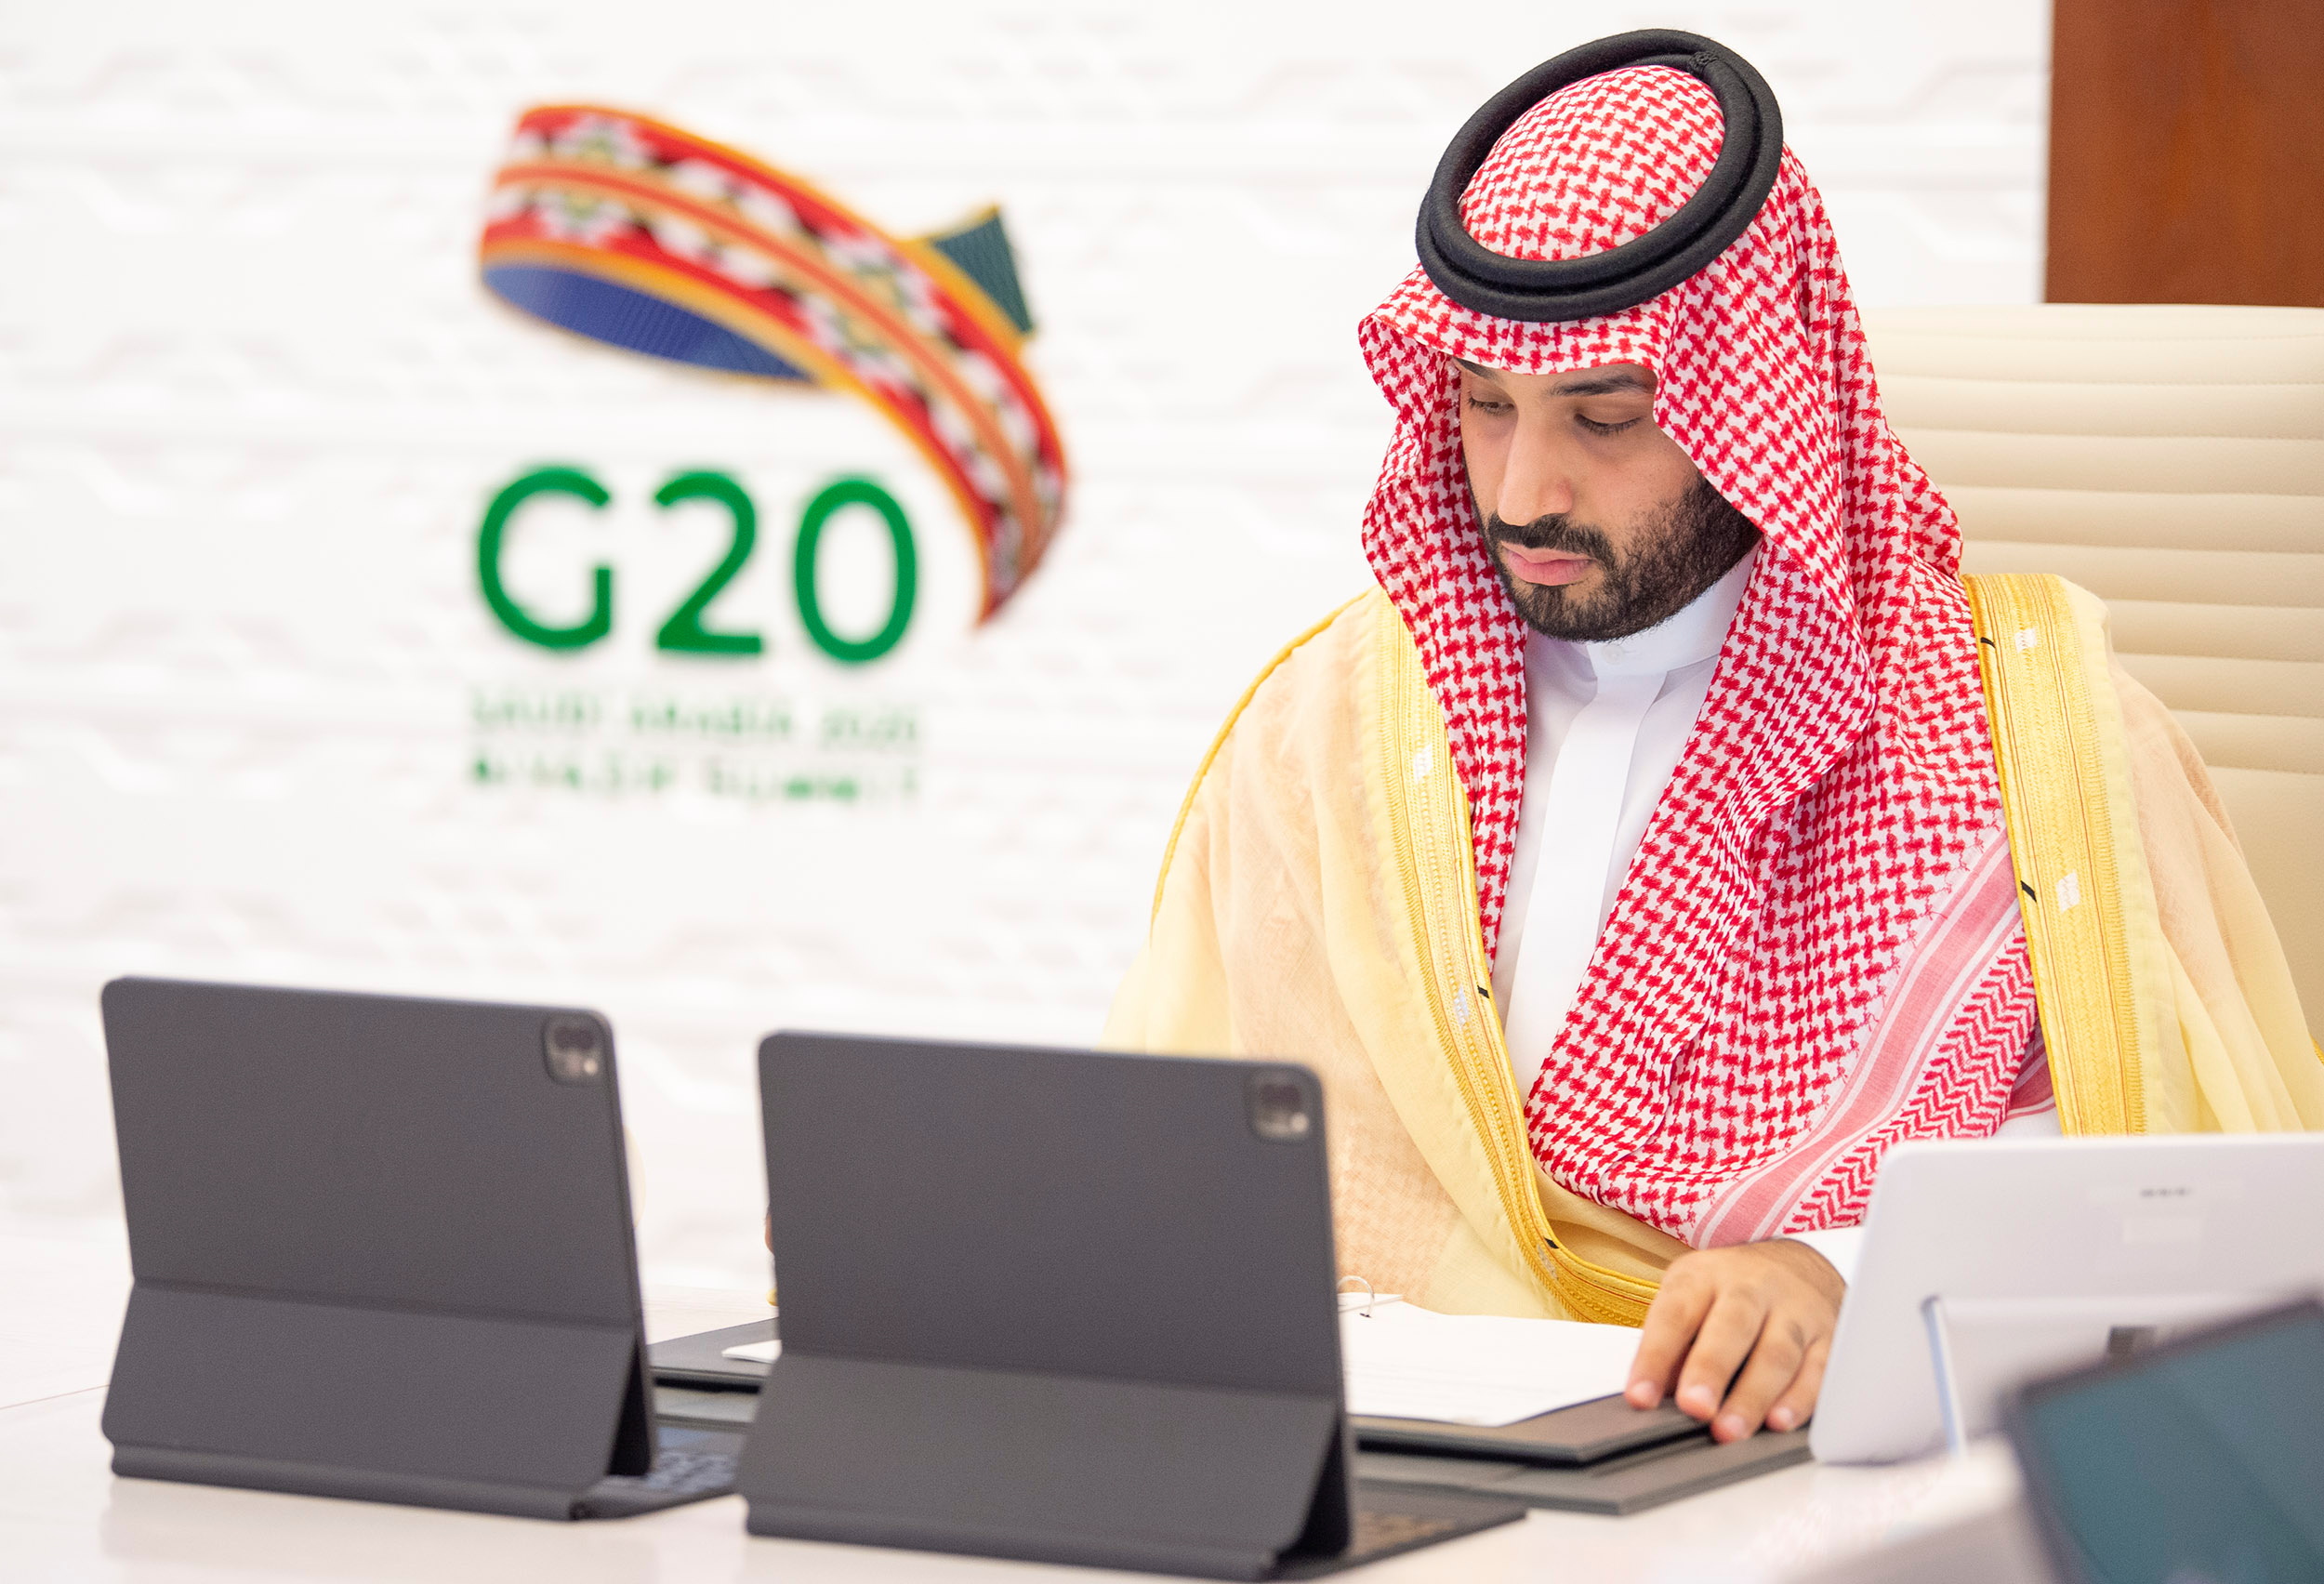 El príncipe Mohammed bin Salman de Arabia Saudita (Bandar Algaloud/Courtesy of Saudi Royal Court/Handout via REUTERS)